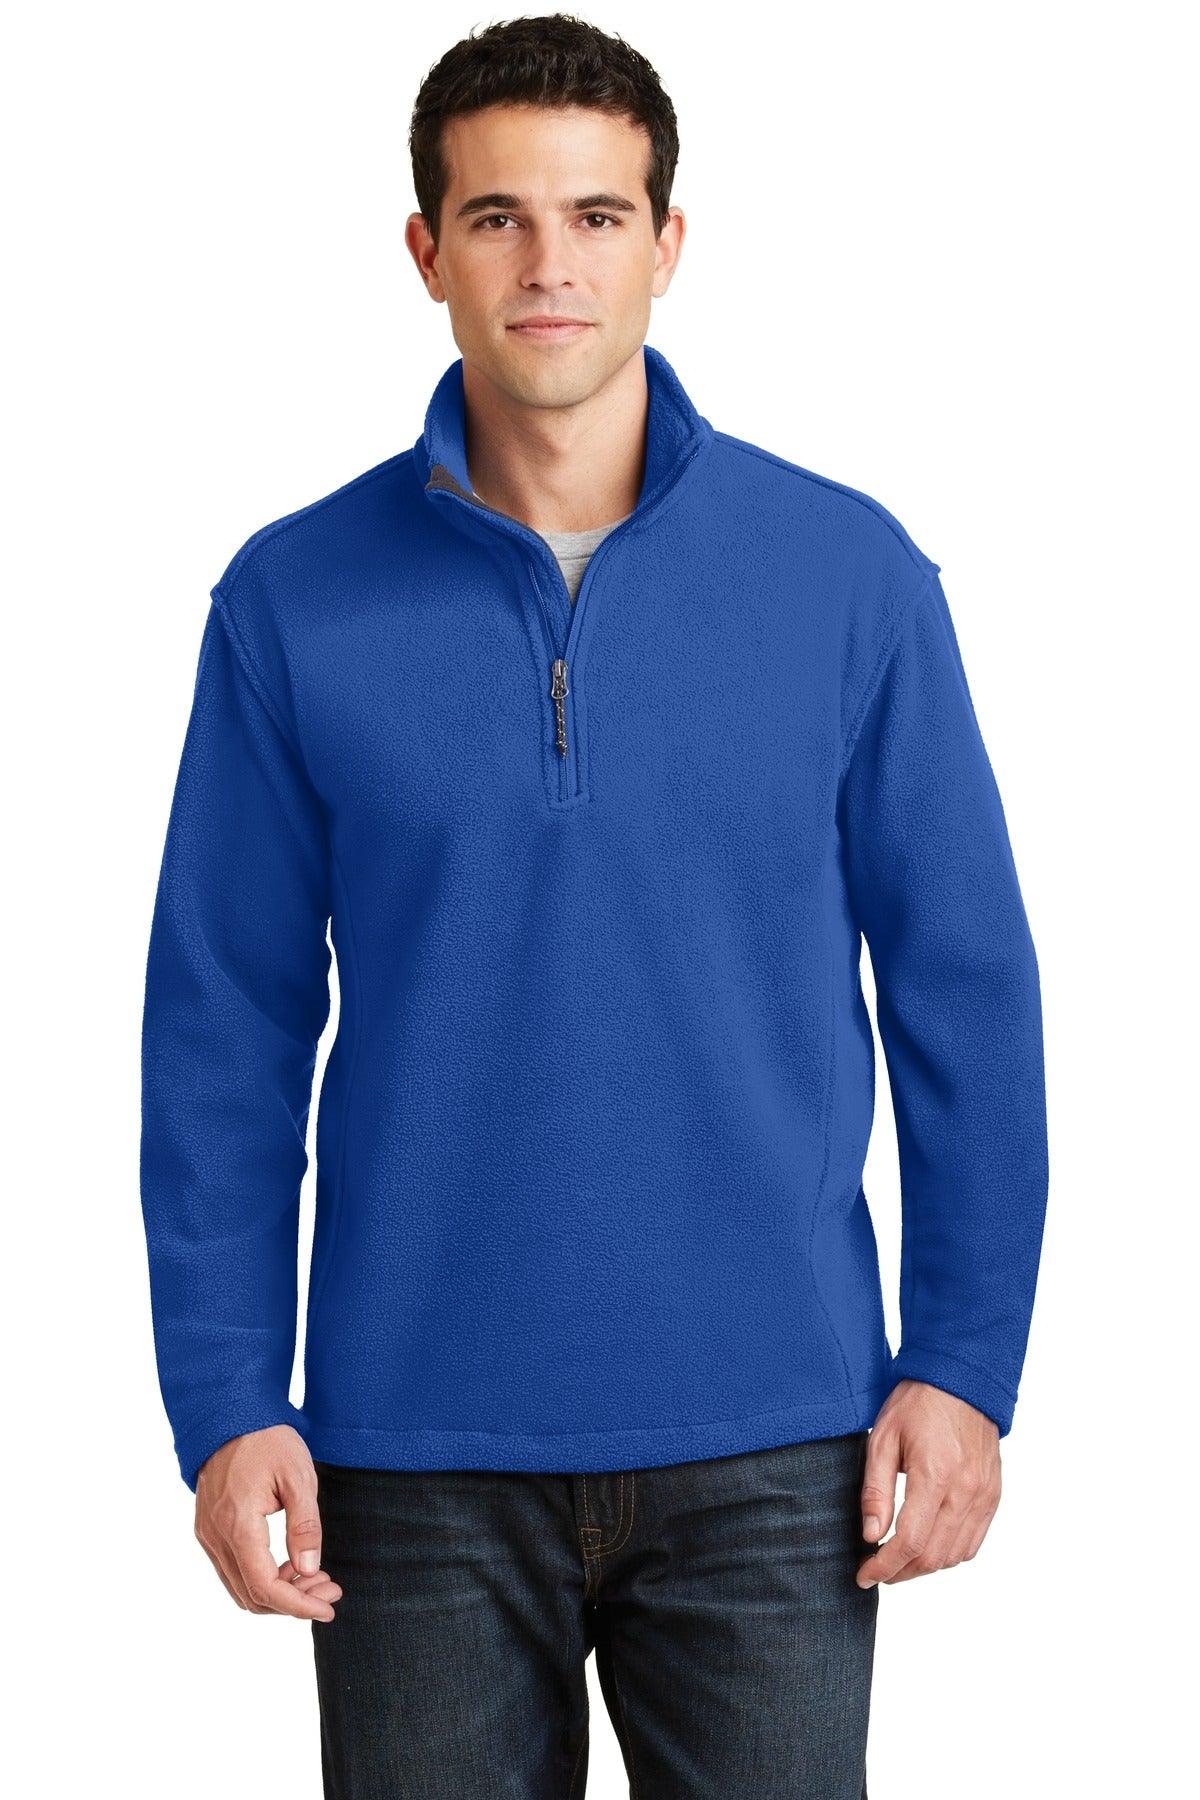 Port Authority Value Fleece 1/4-Zip Pullover. F218 - Dresses Max